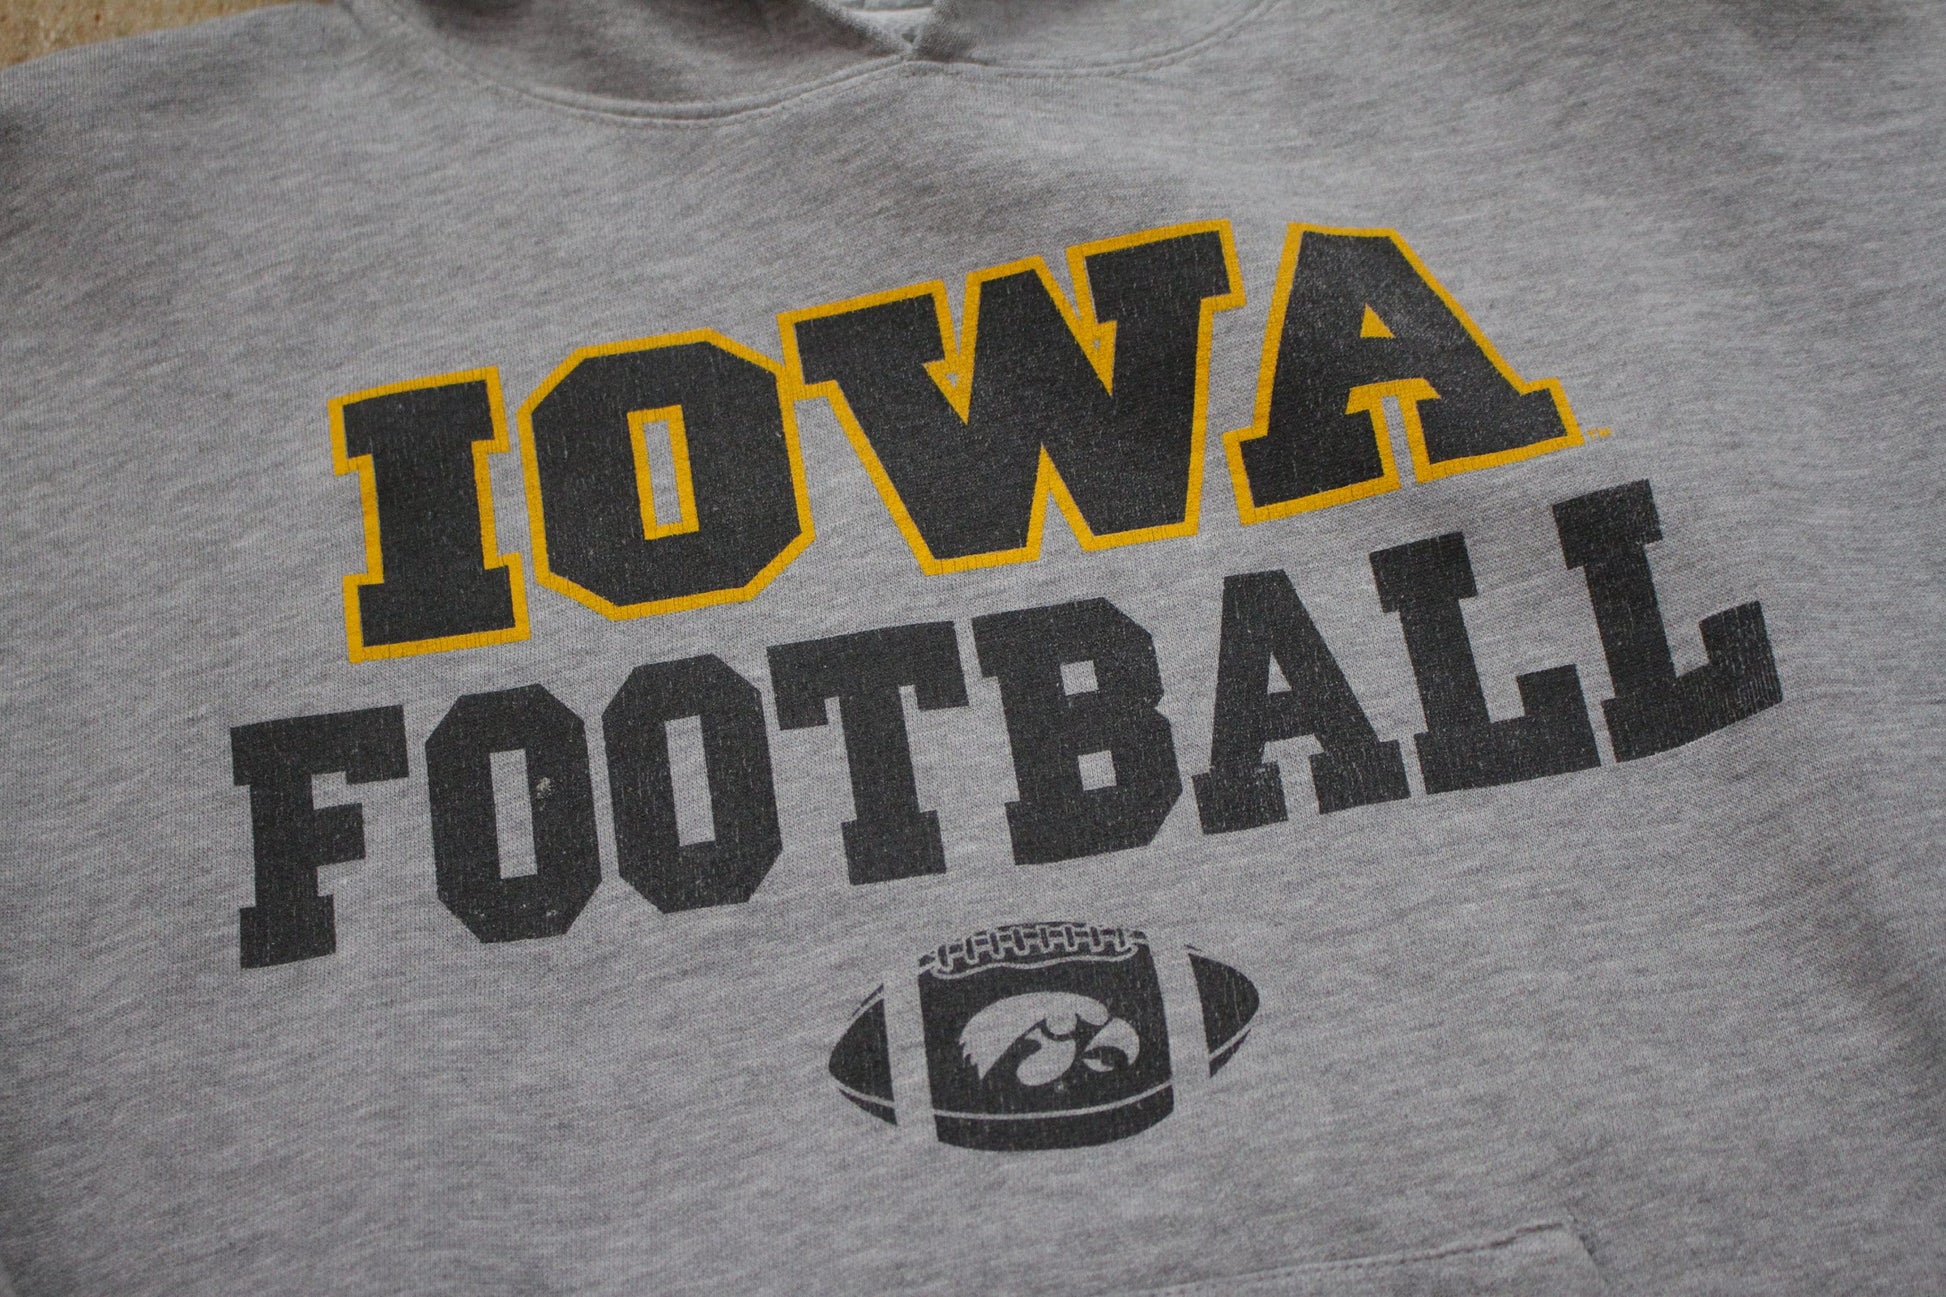 1990s/2000s University of Iowa Hawkeyes Football Hoodie Sweatshirt Size M